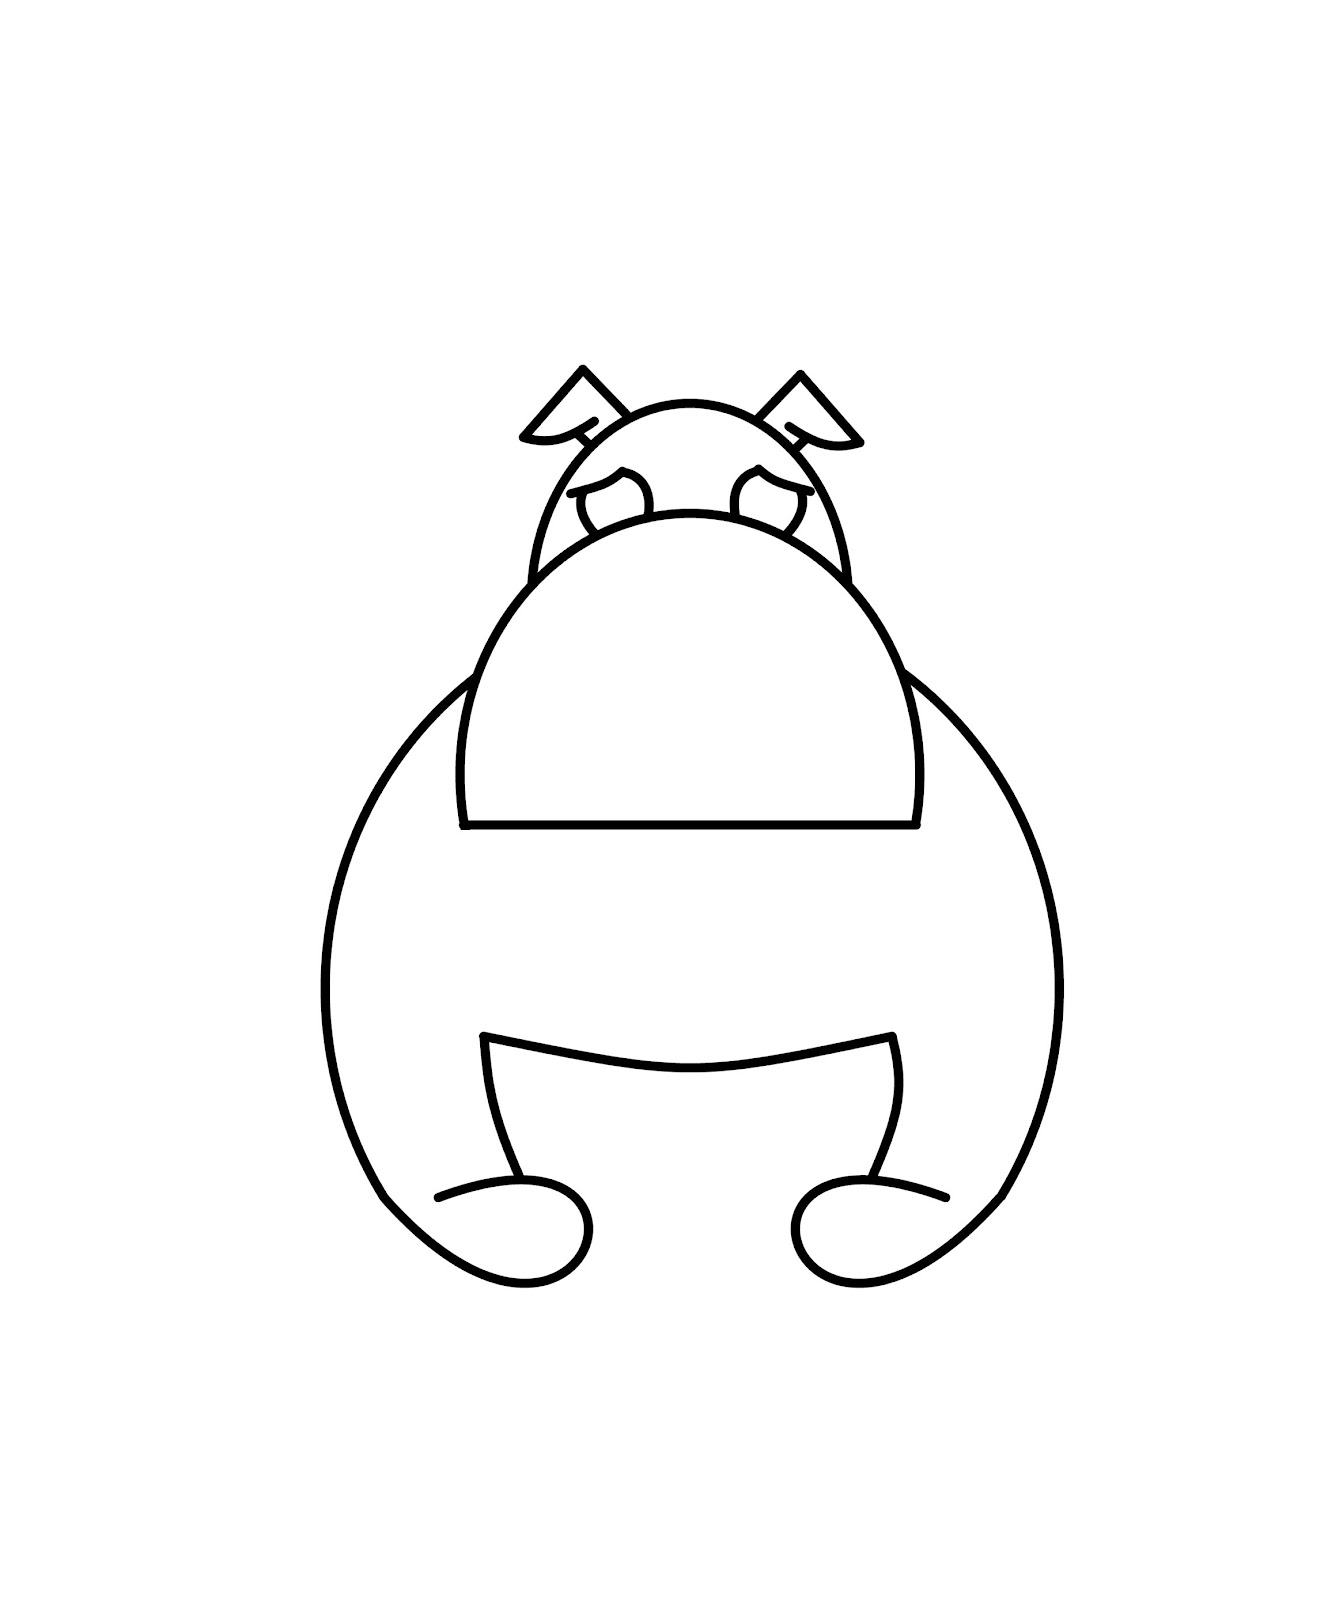 How To Draw Cartoons: Bulldog